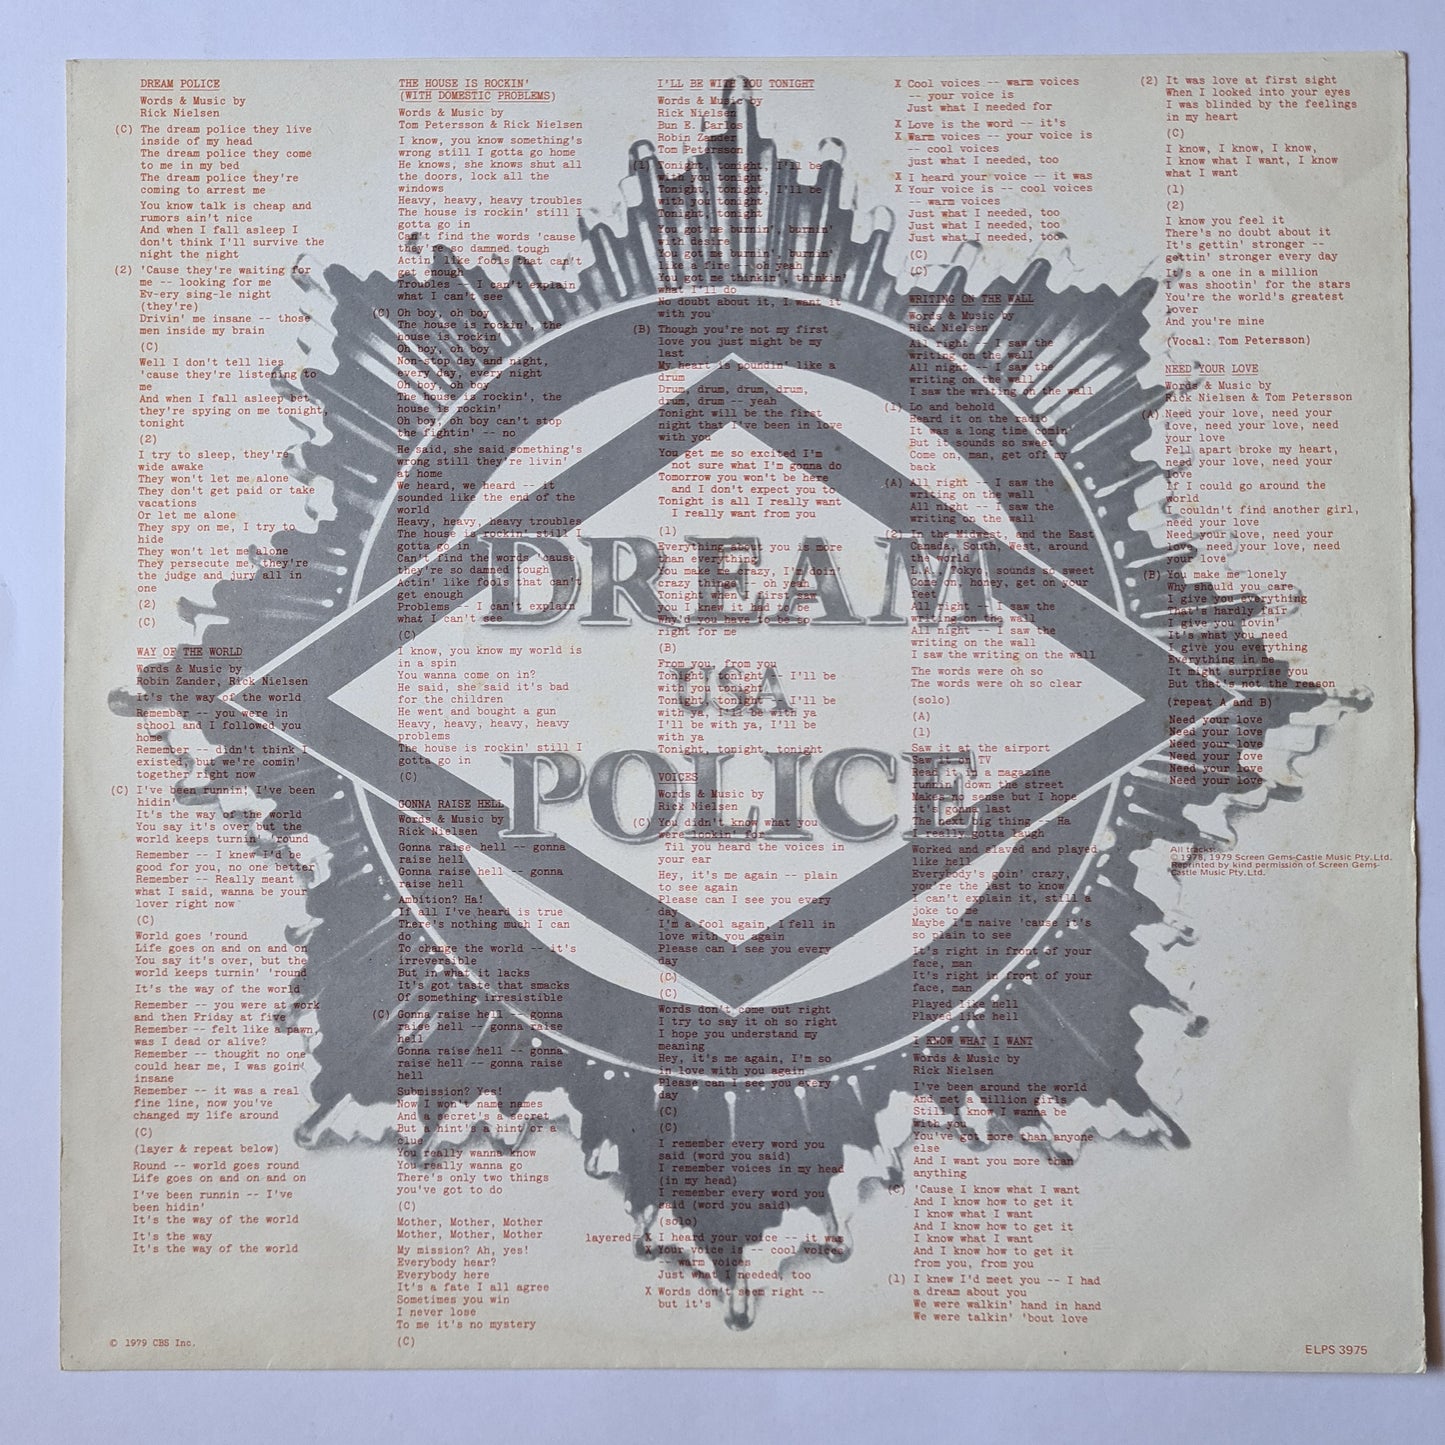 Cheap Trick – Dream Police - 1979 (Gatefold) - Vinyl Record